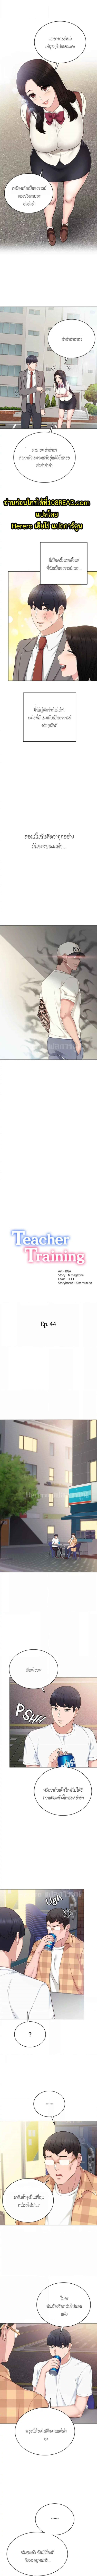 Teaching Practice 44 (1)